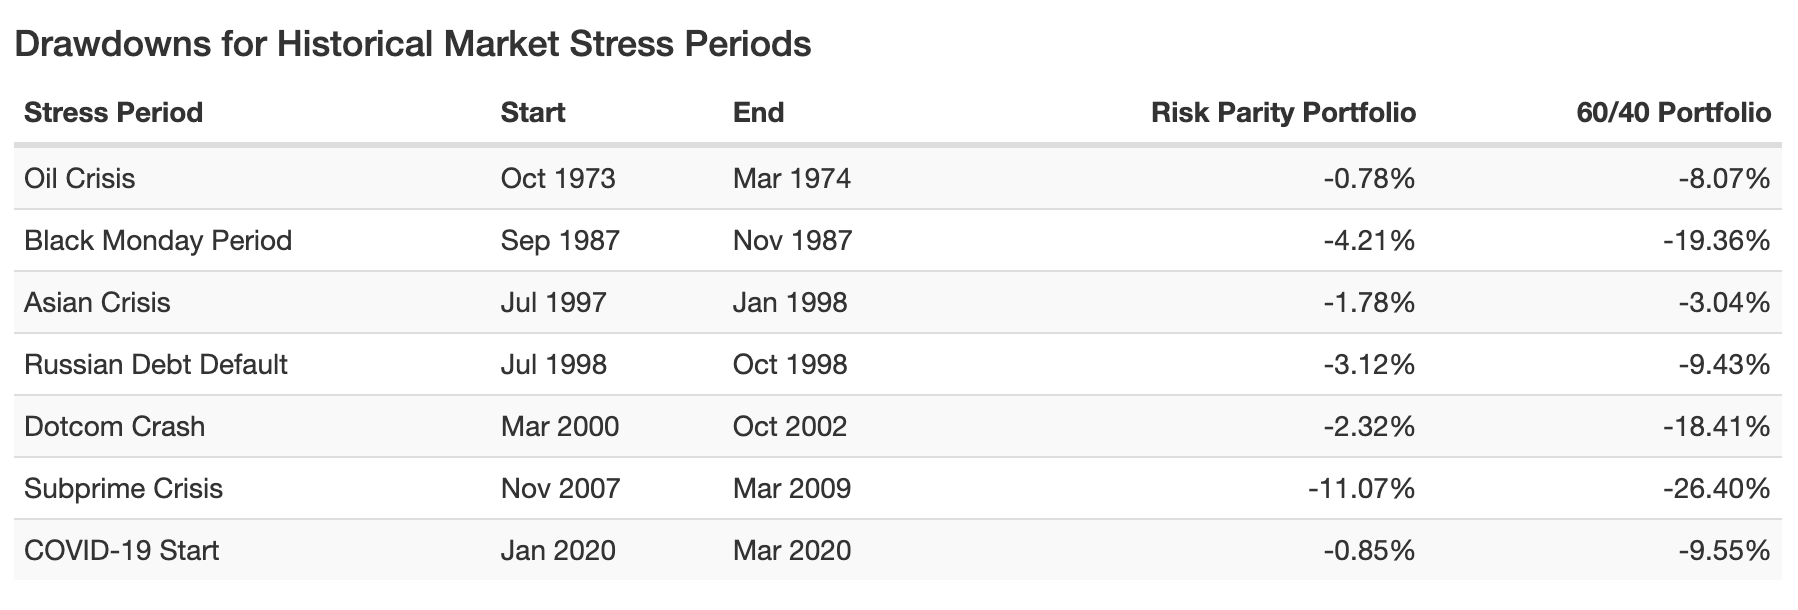 Risk Parity Portfolio vs 60/40 Portfolio Drawdowns for Historical Market Stress Periods